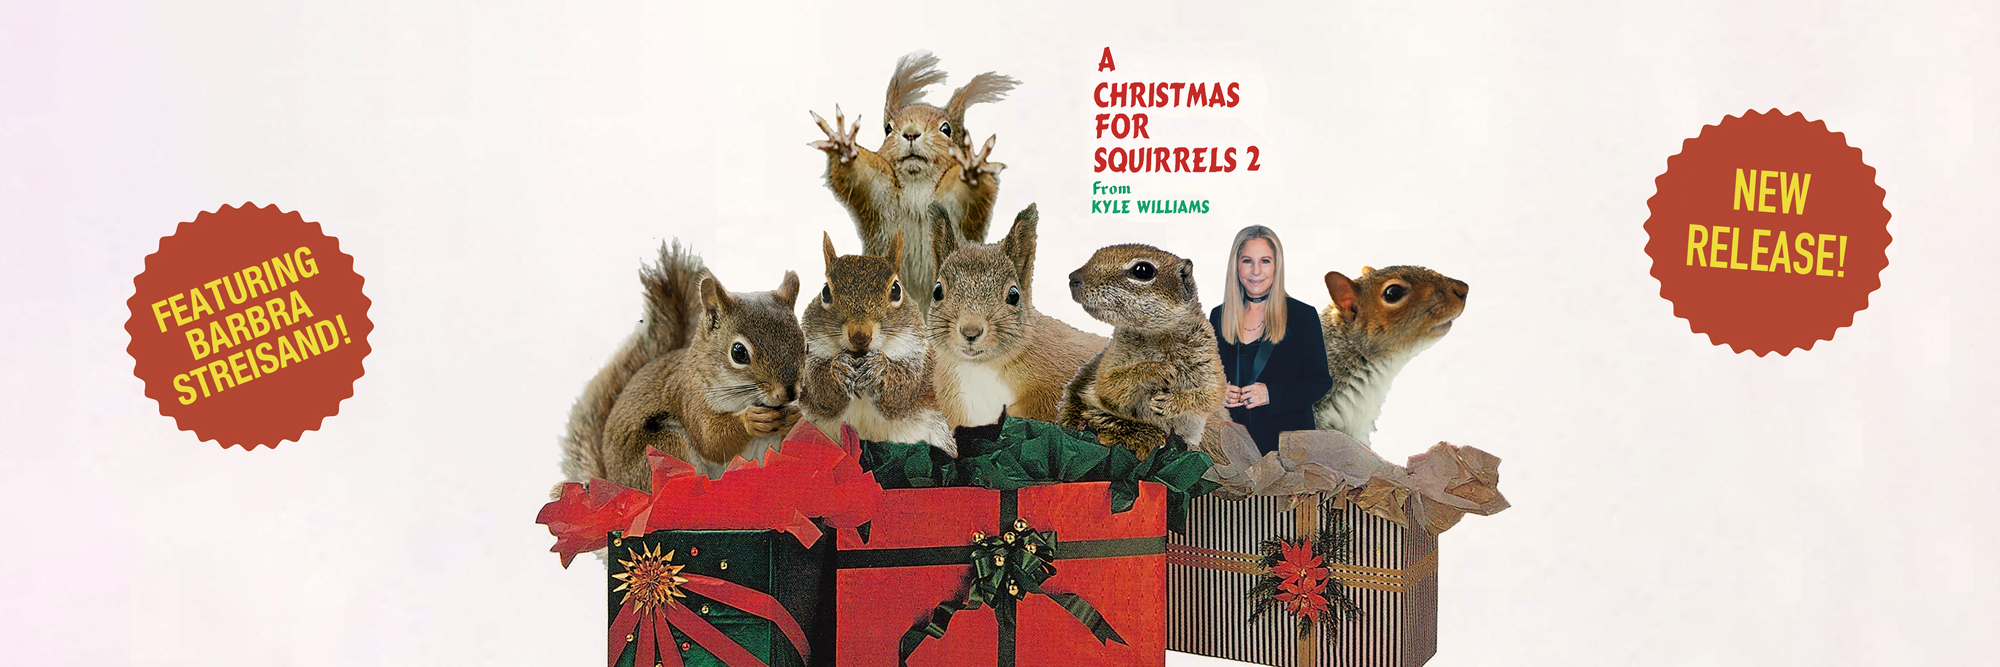 A christmas for squirrels album art